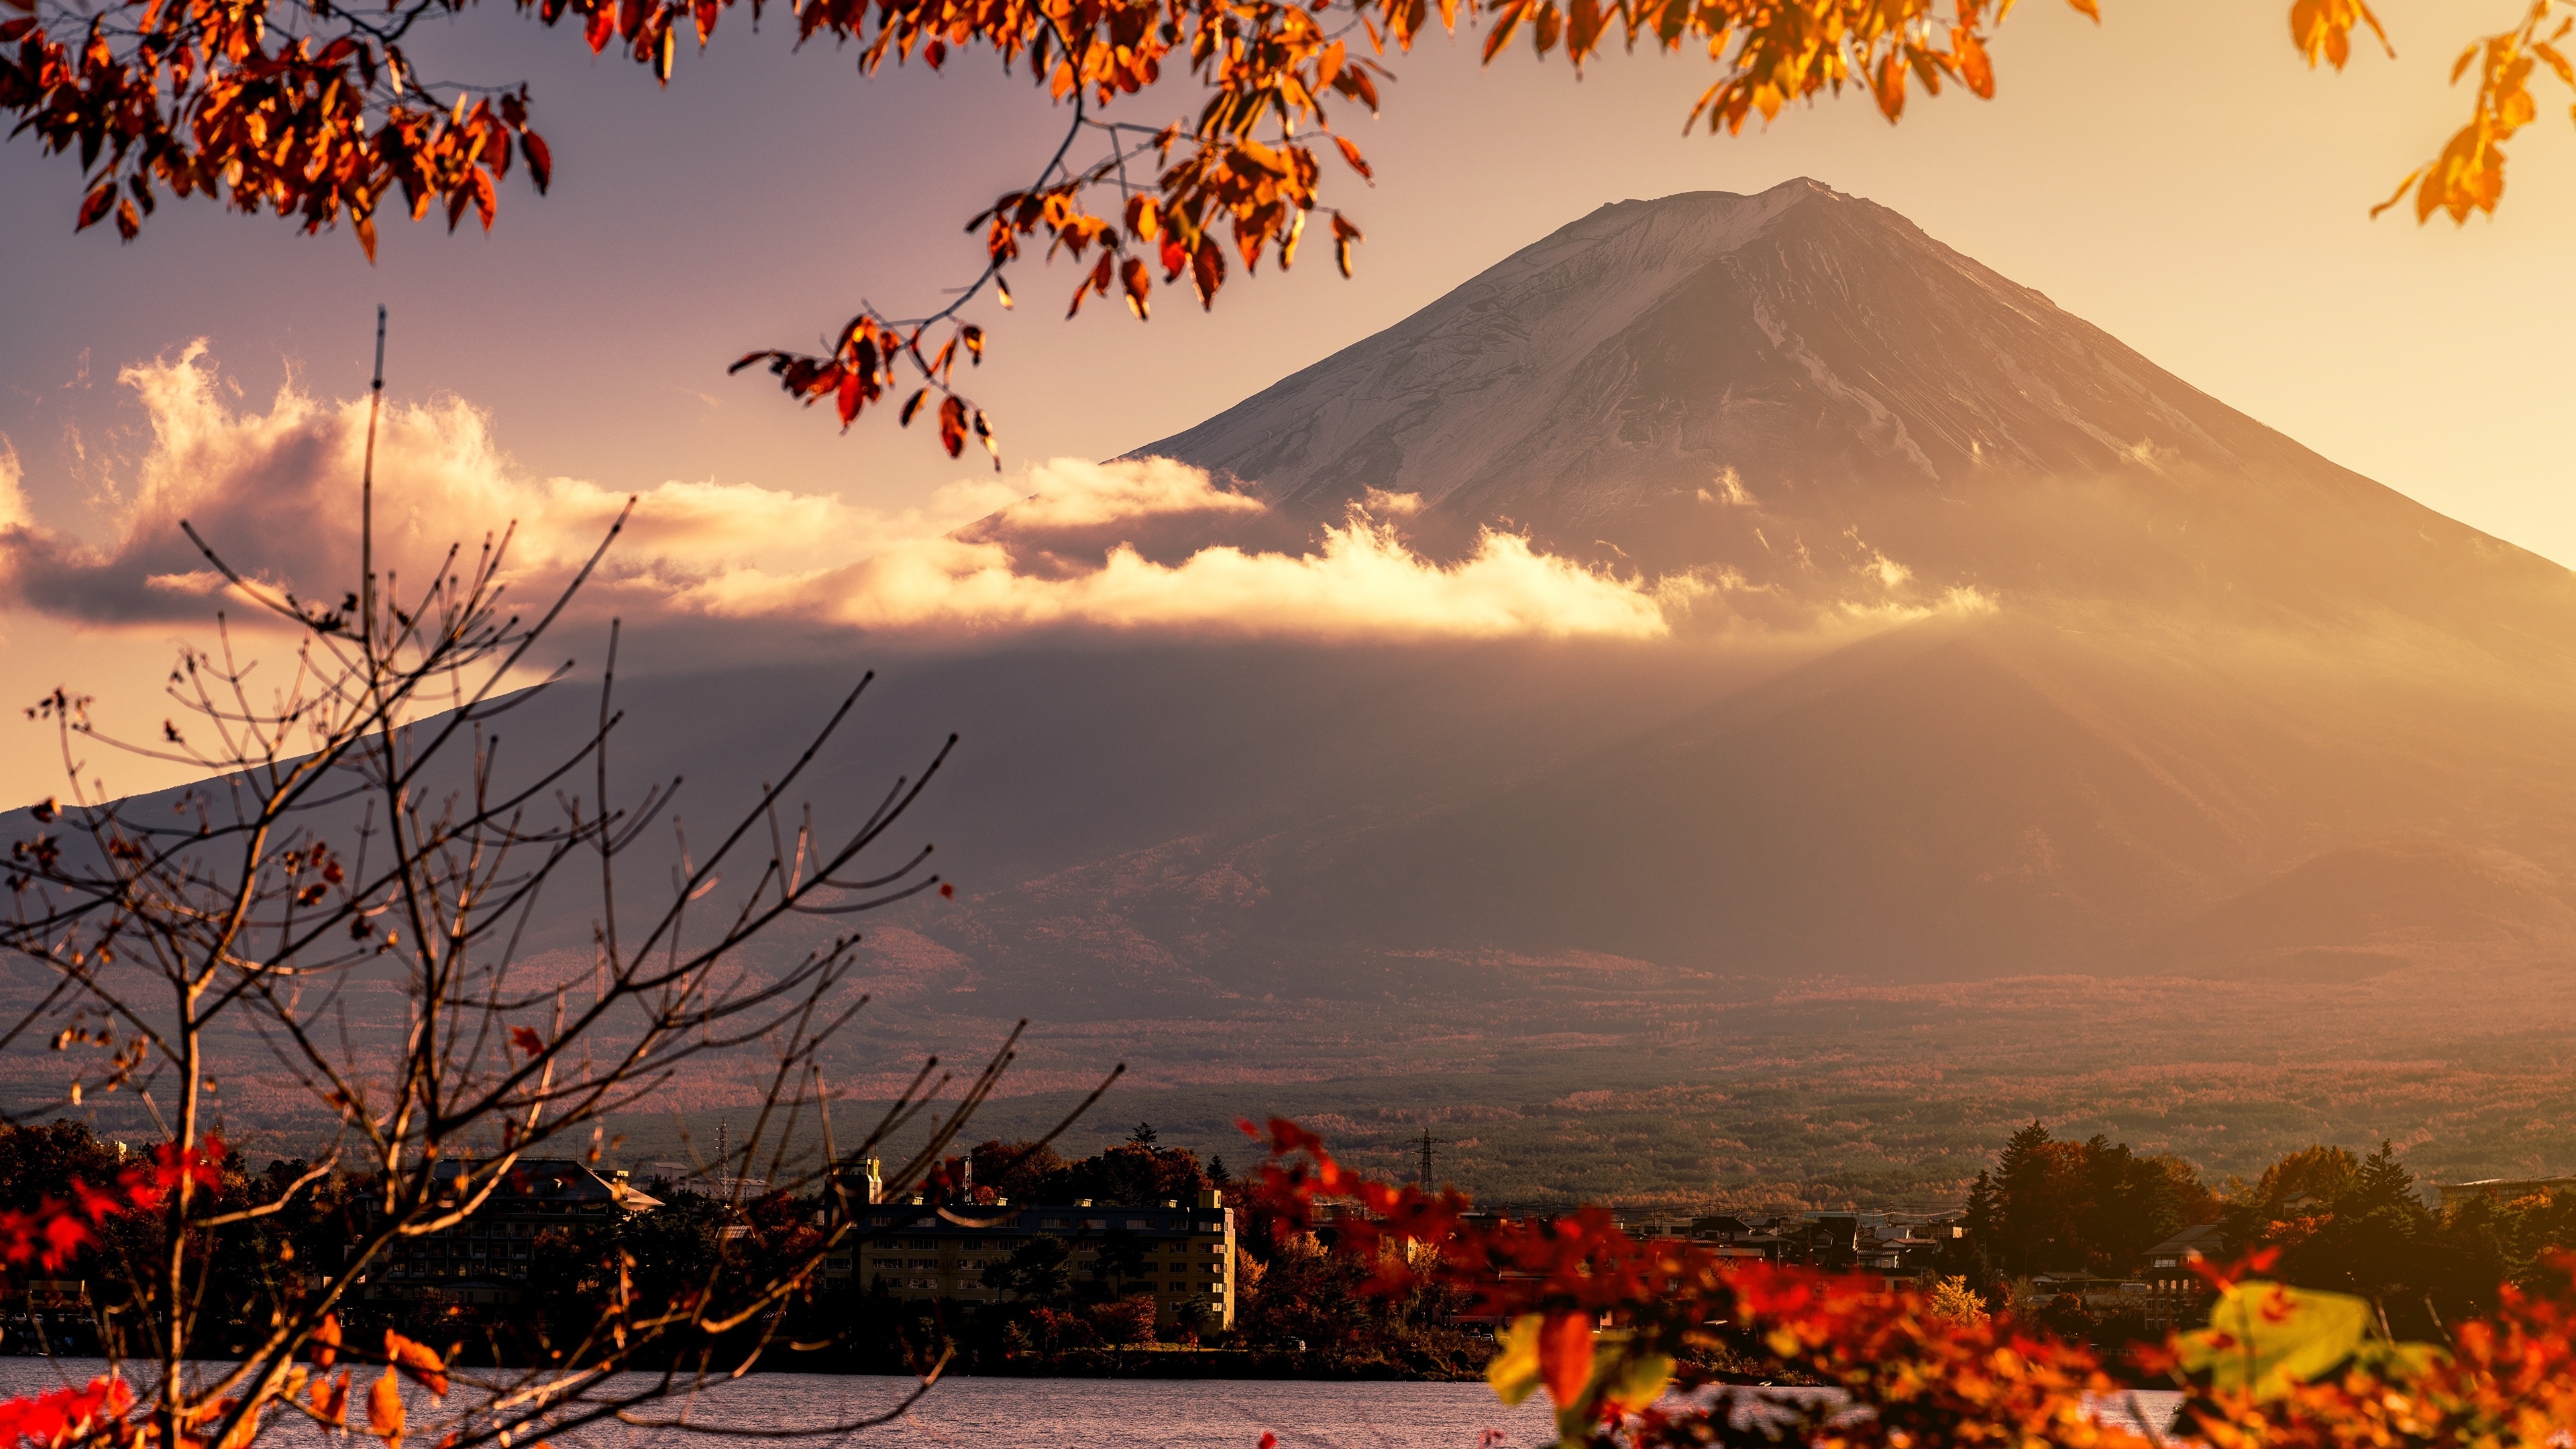 Mount Fuji volcano, Morning beauty, Majestic landscapes, Captivating HD wallpaper, 3840x2160 4K Desktop